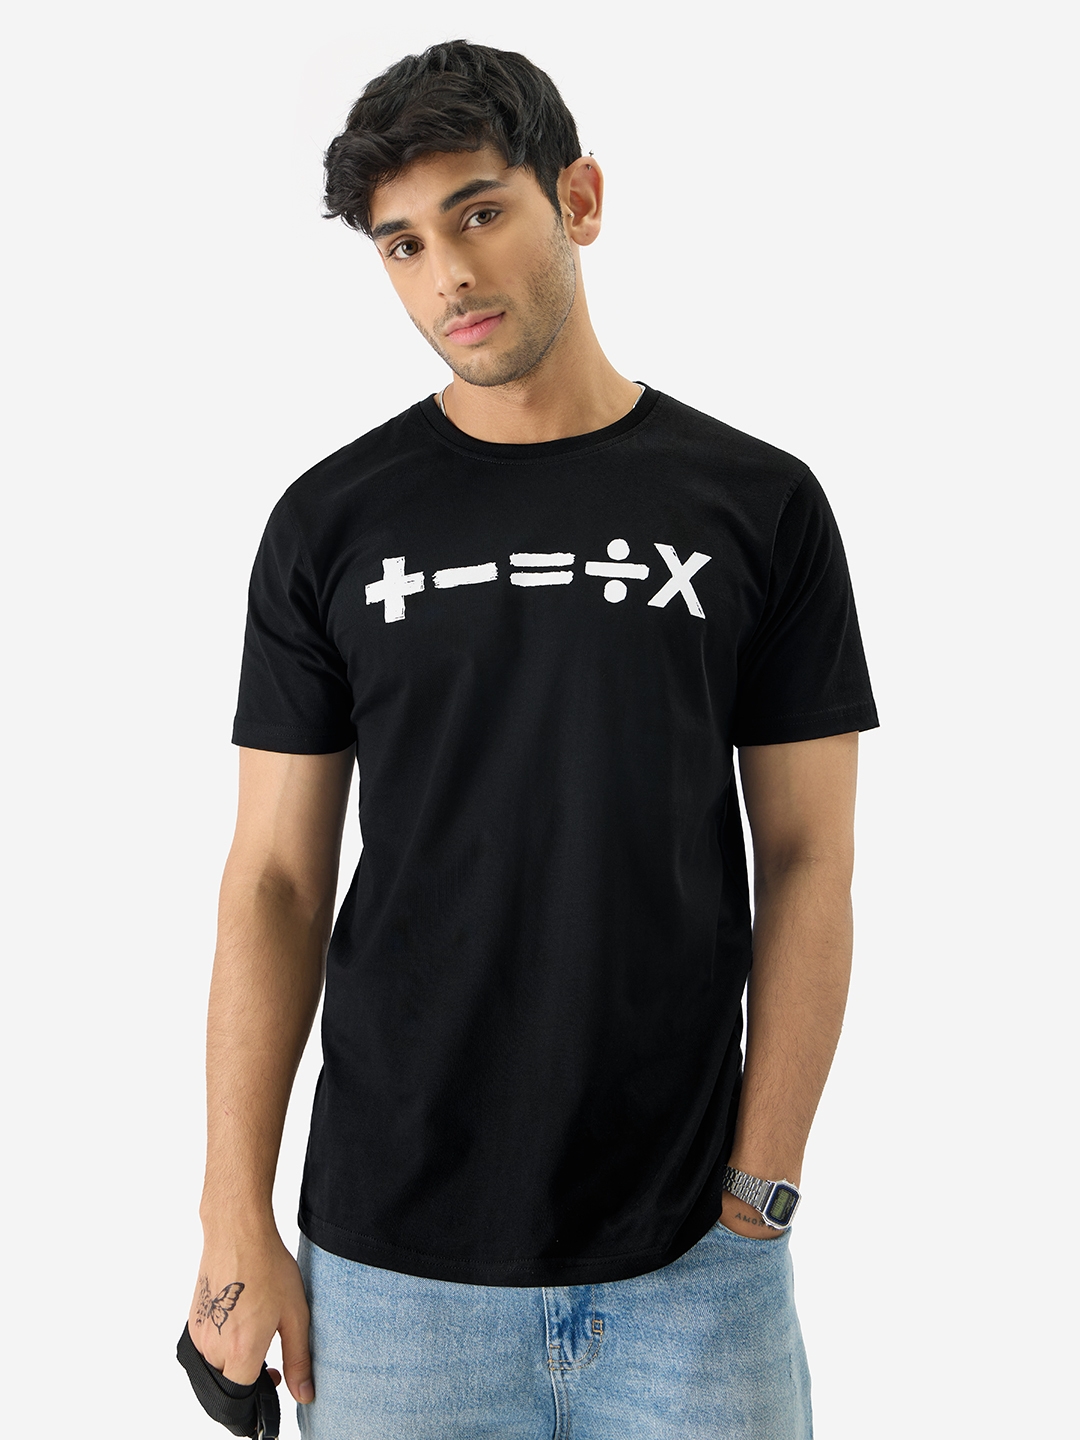 The Souled Store | Men's Ed Sheeran: Mathematics Tour T-Shirts